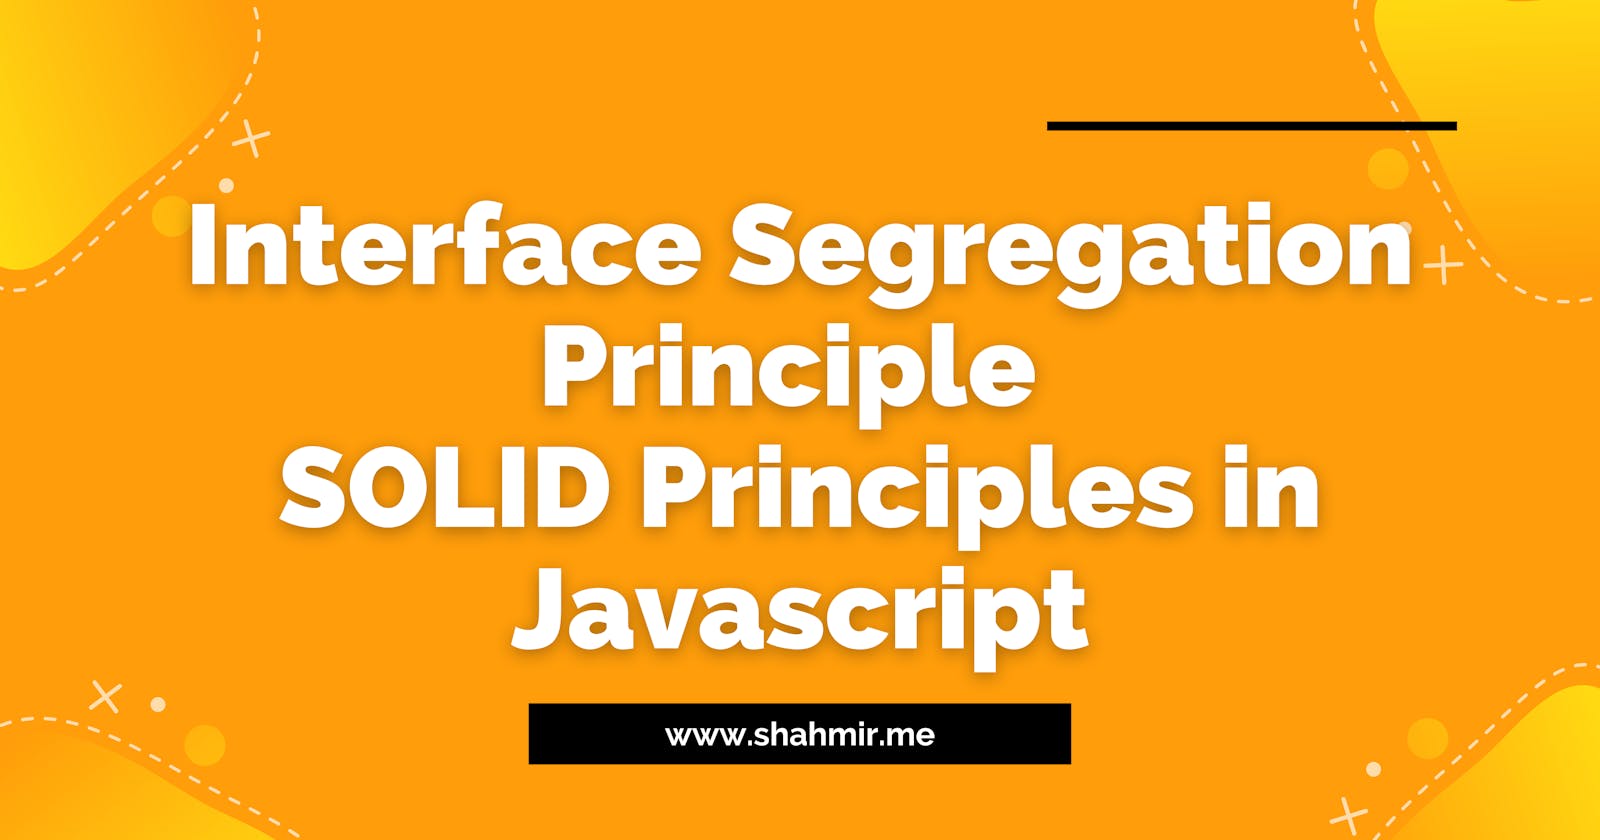 Interface Segregation Principle - SOLID Principles in Javascript